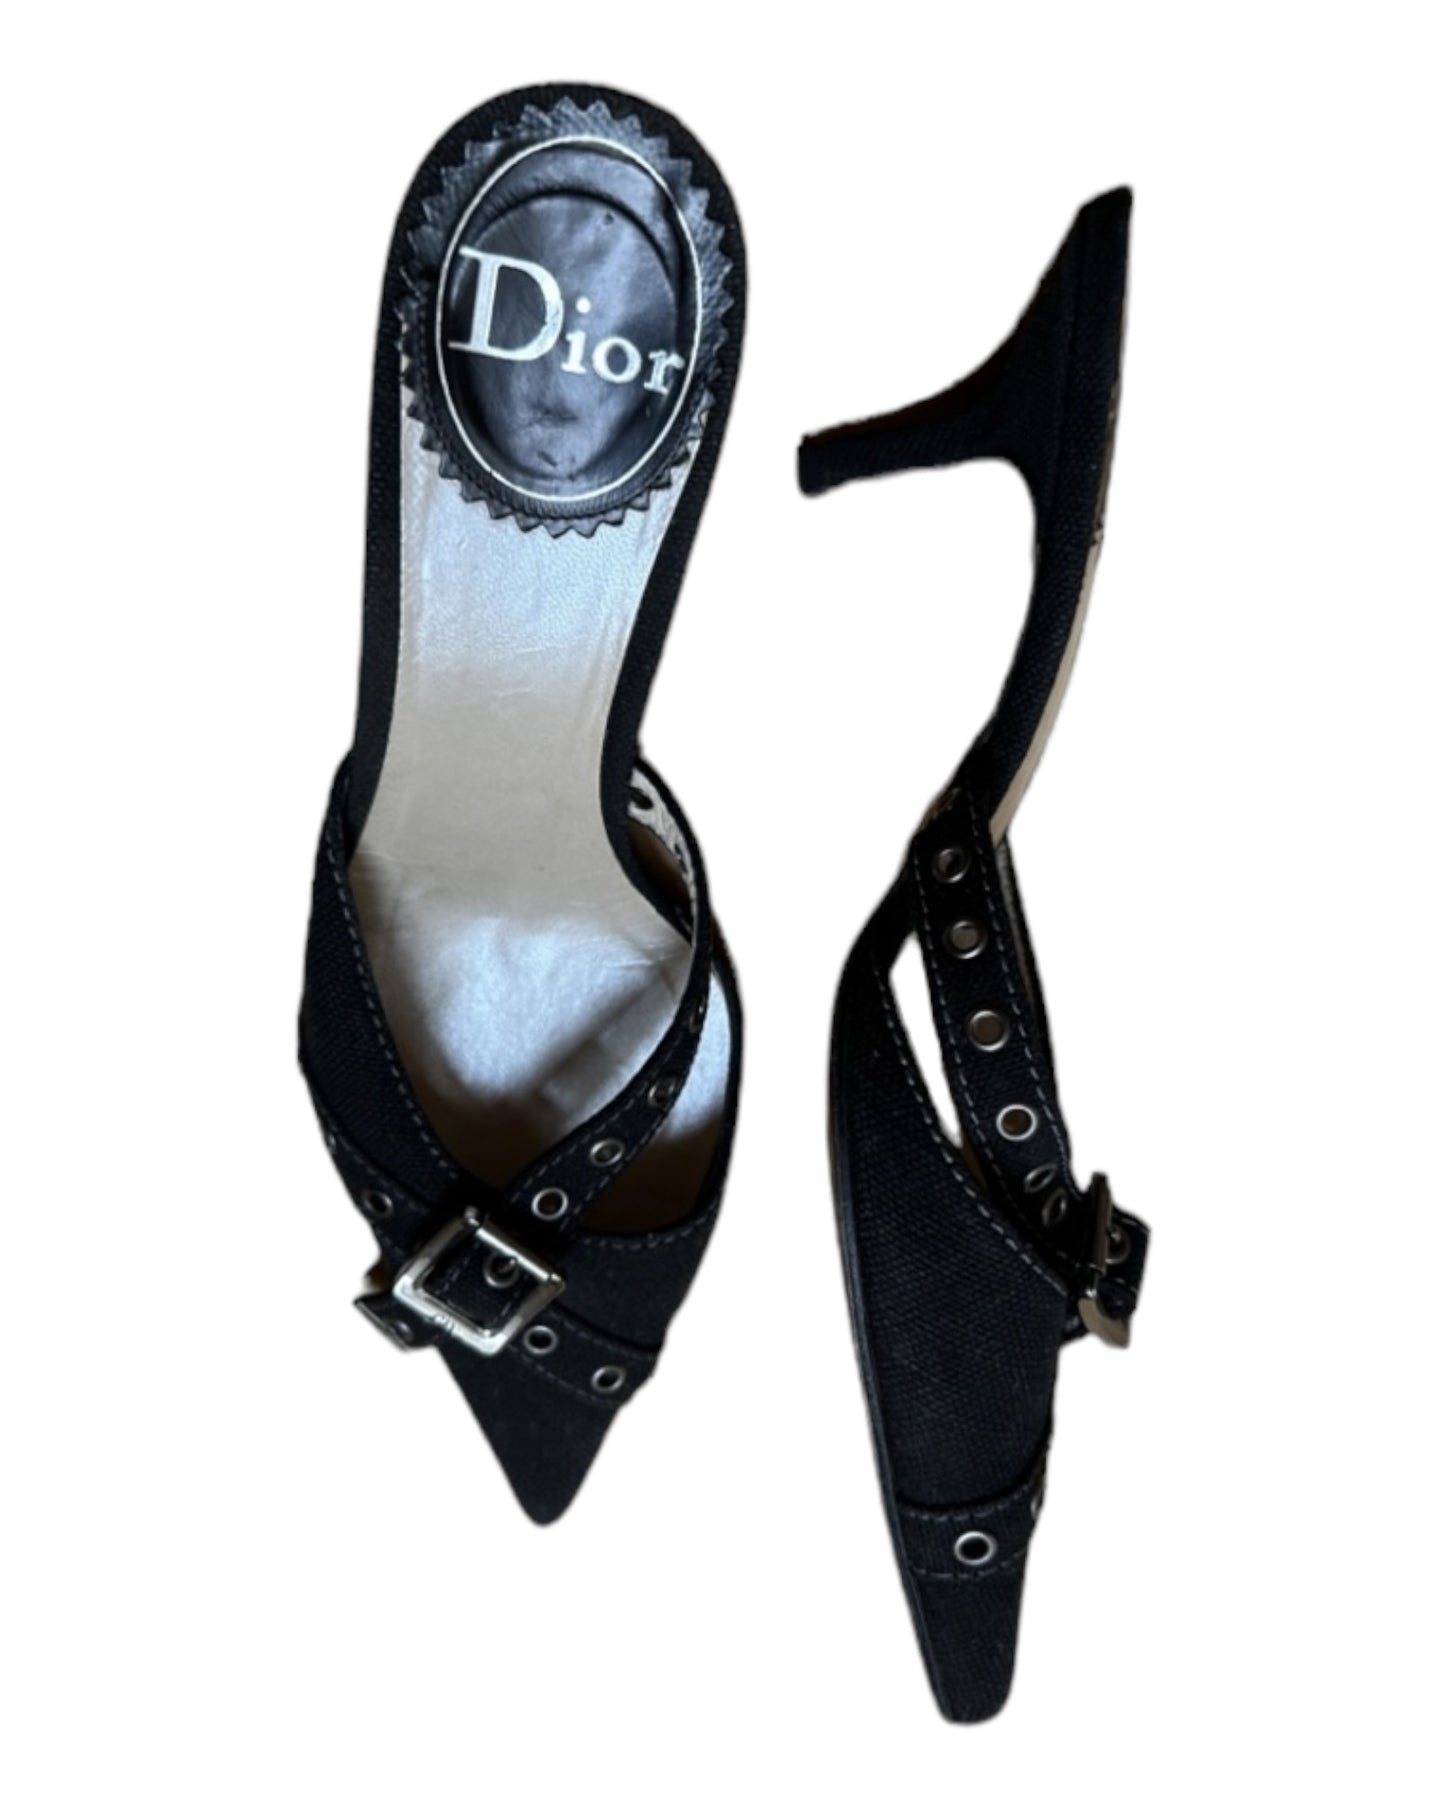 Vintage Dior black cloth mules